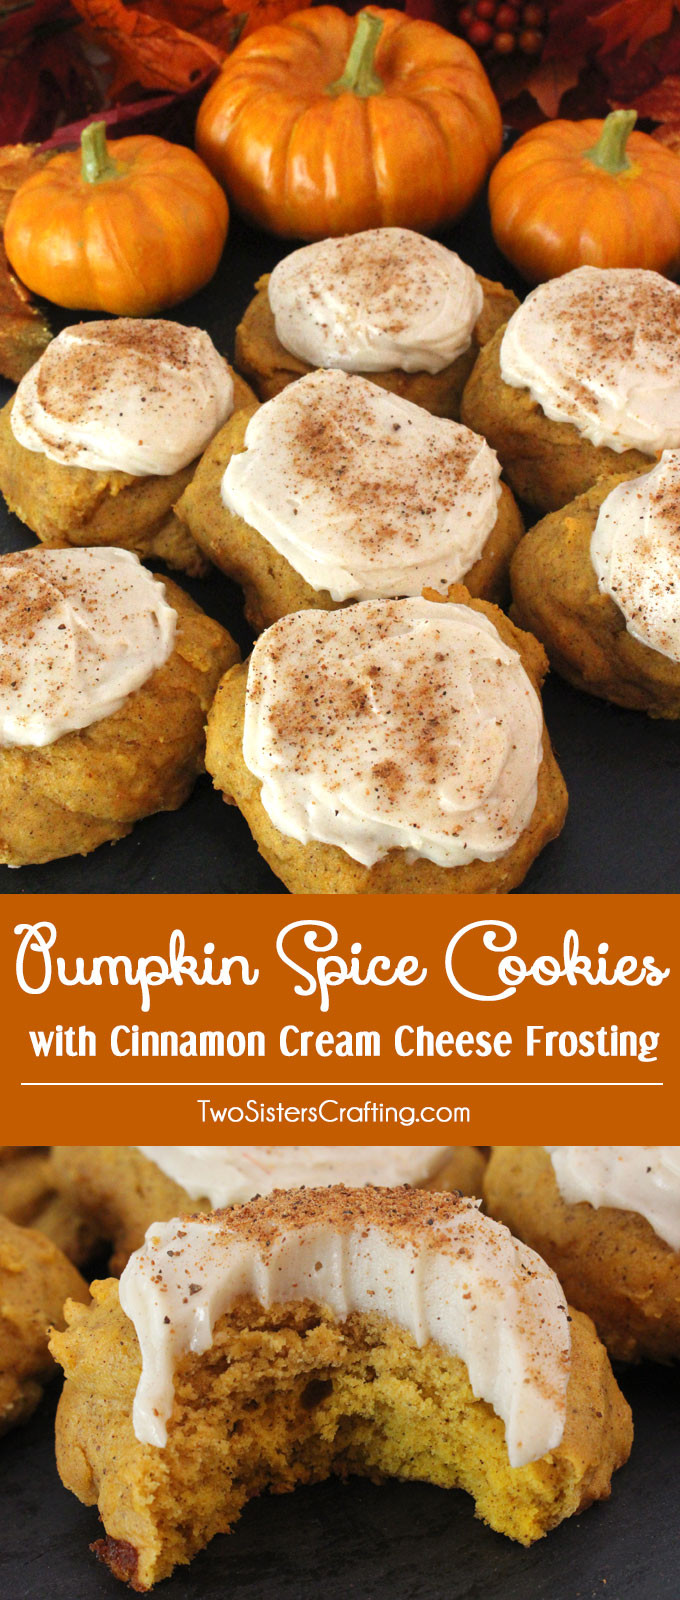 Pumpkin Spice Cookies
 Pumpkin Spice Cookies with Cinnamon Cream Cheese Frosting